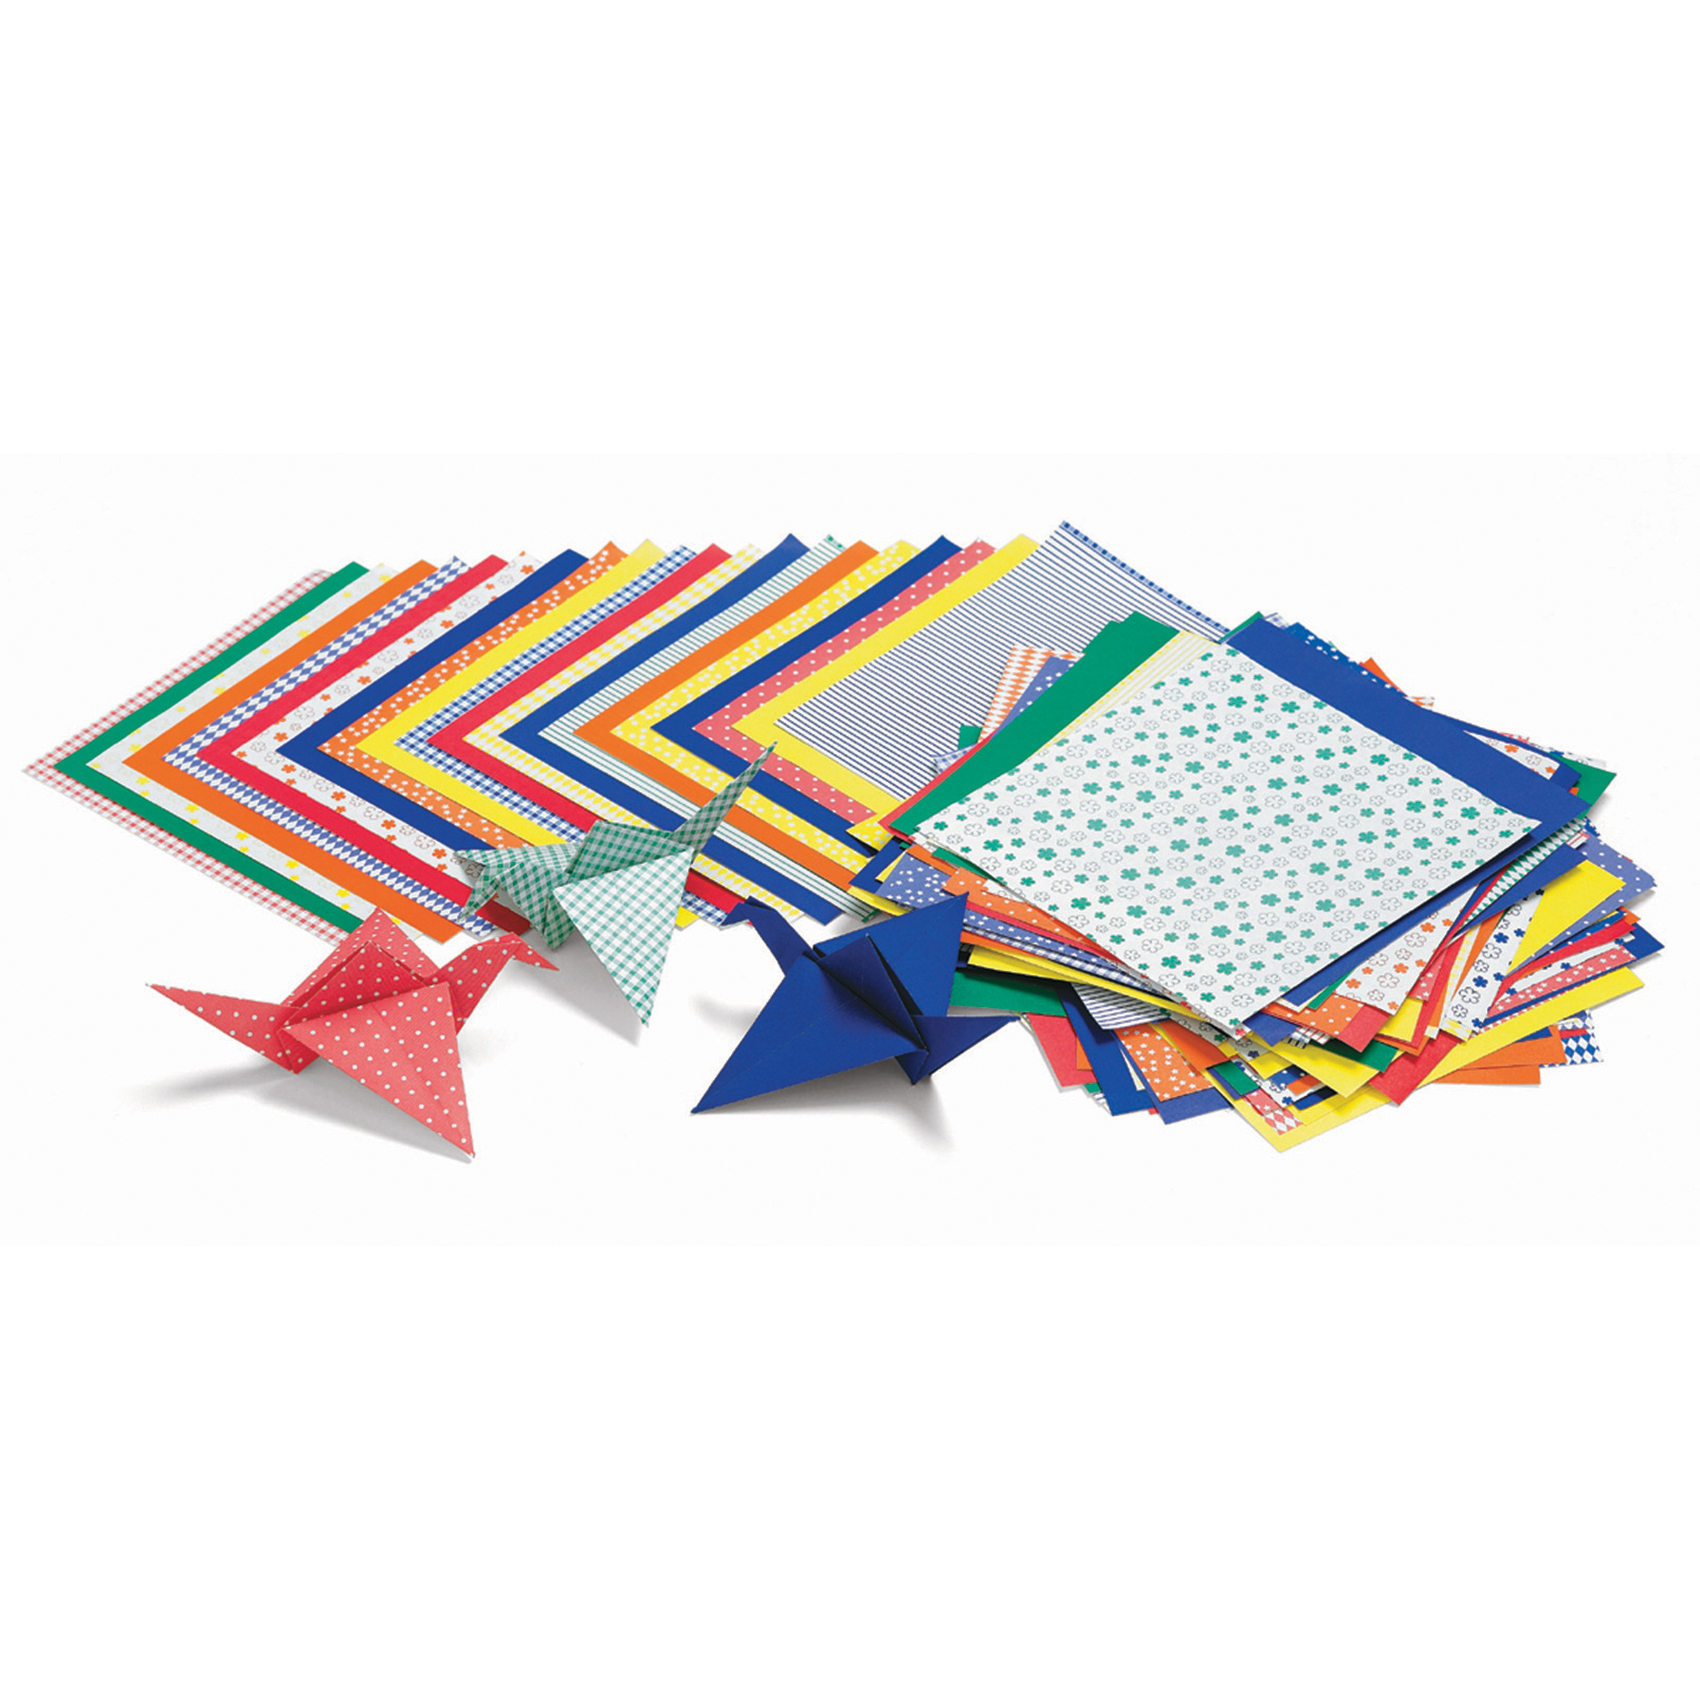 Roylco Economy Origami Paper 72 Shts Per Pk, Bundle Of 3